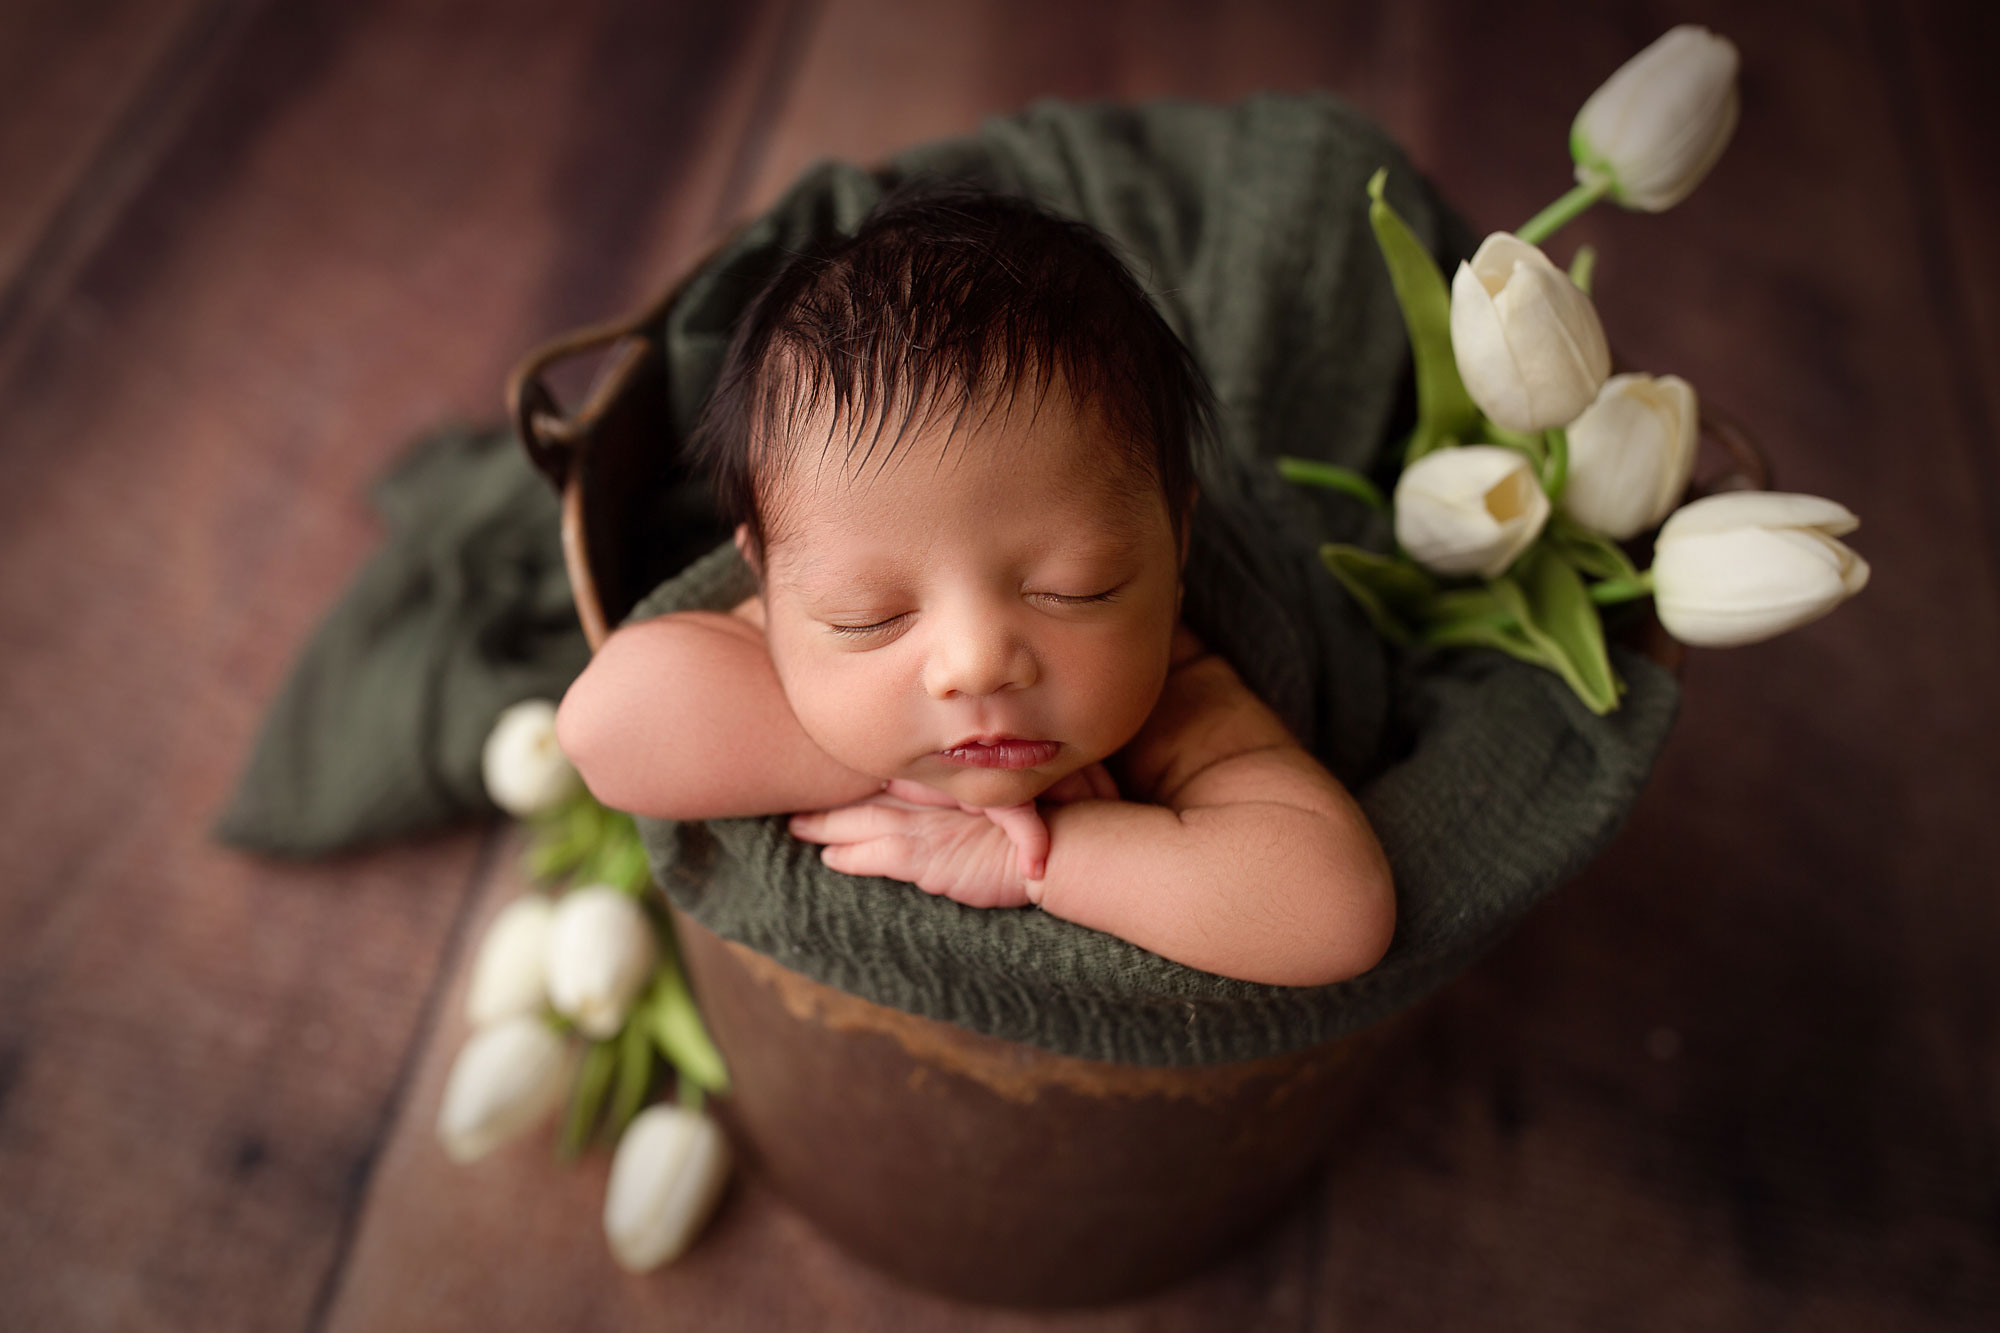 newborn photography studio nj, baby asleep in bucket with white flowers